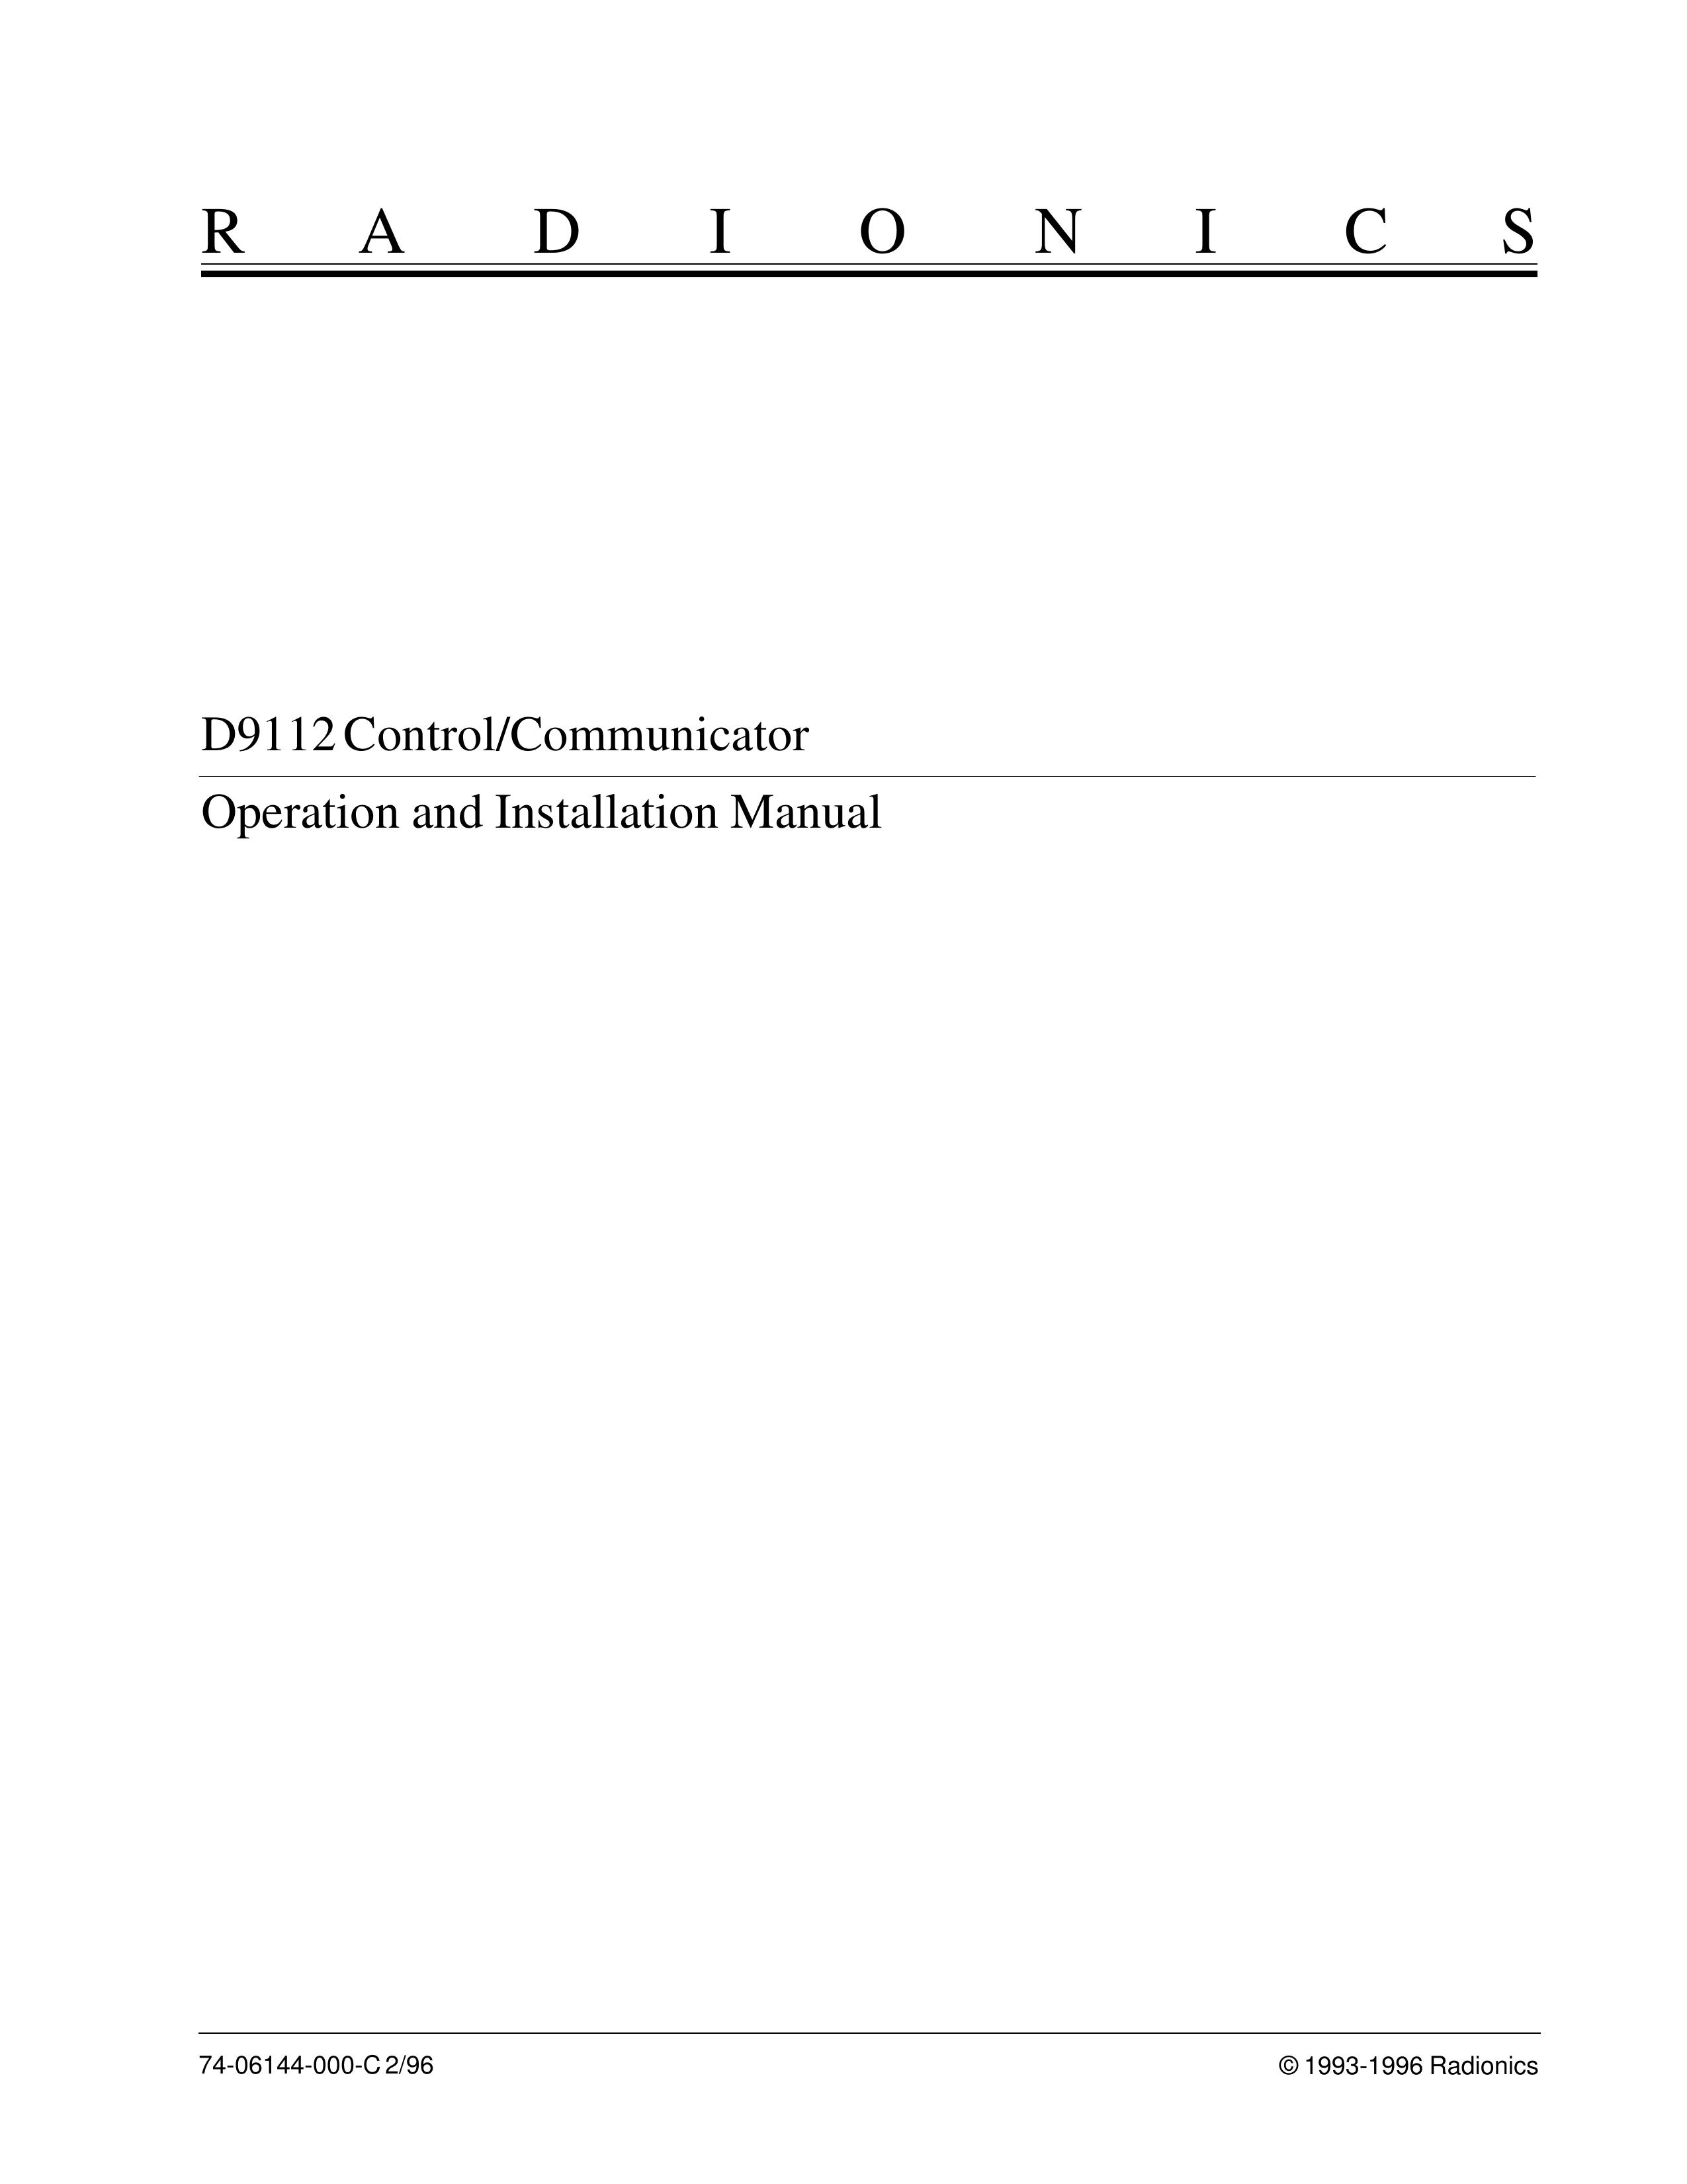 Bosch Appliances D9112 Marine Radio User Manual